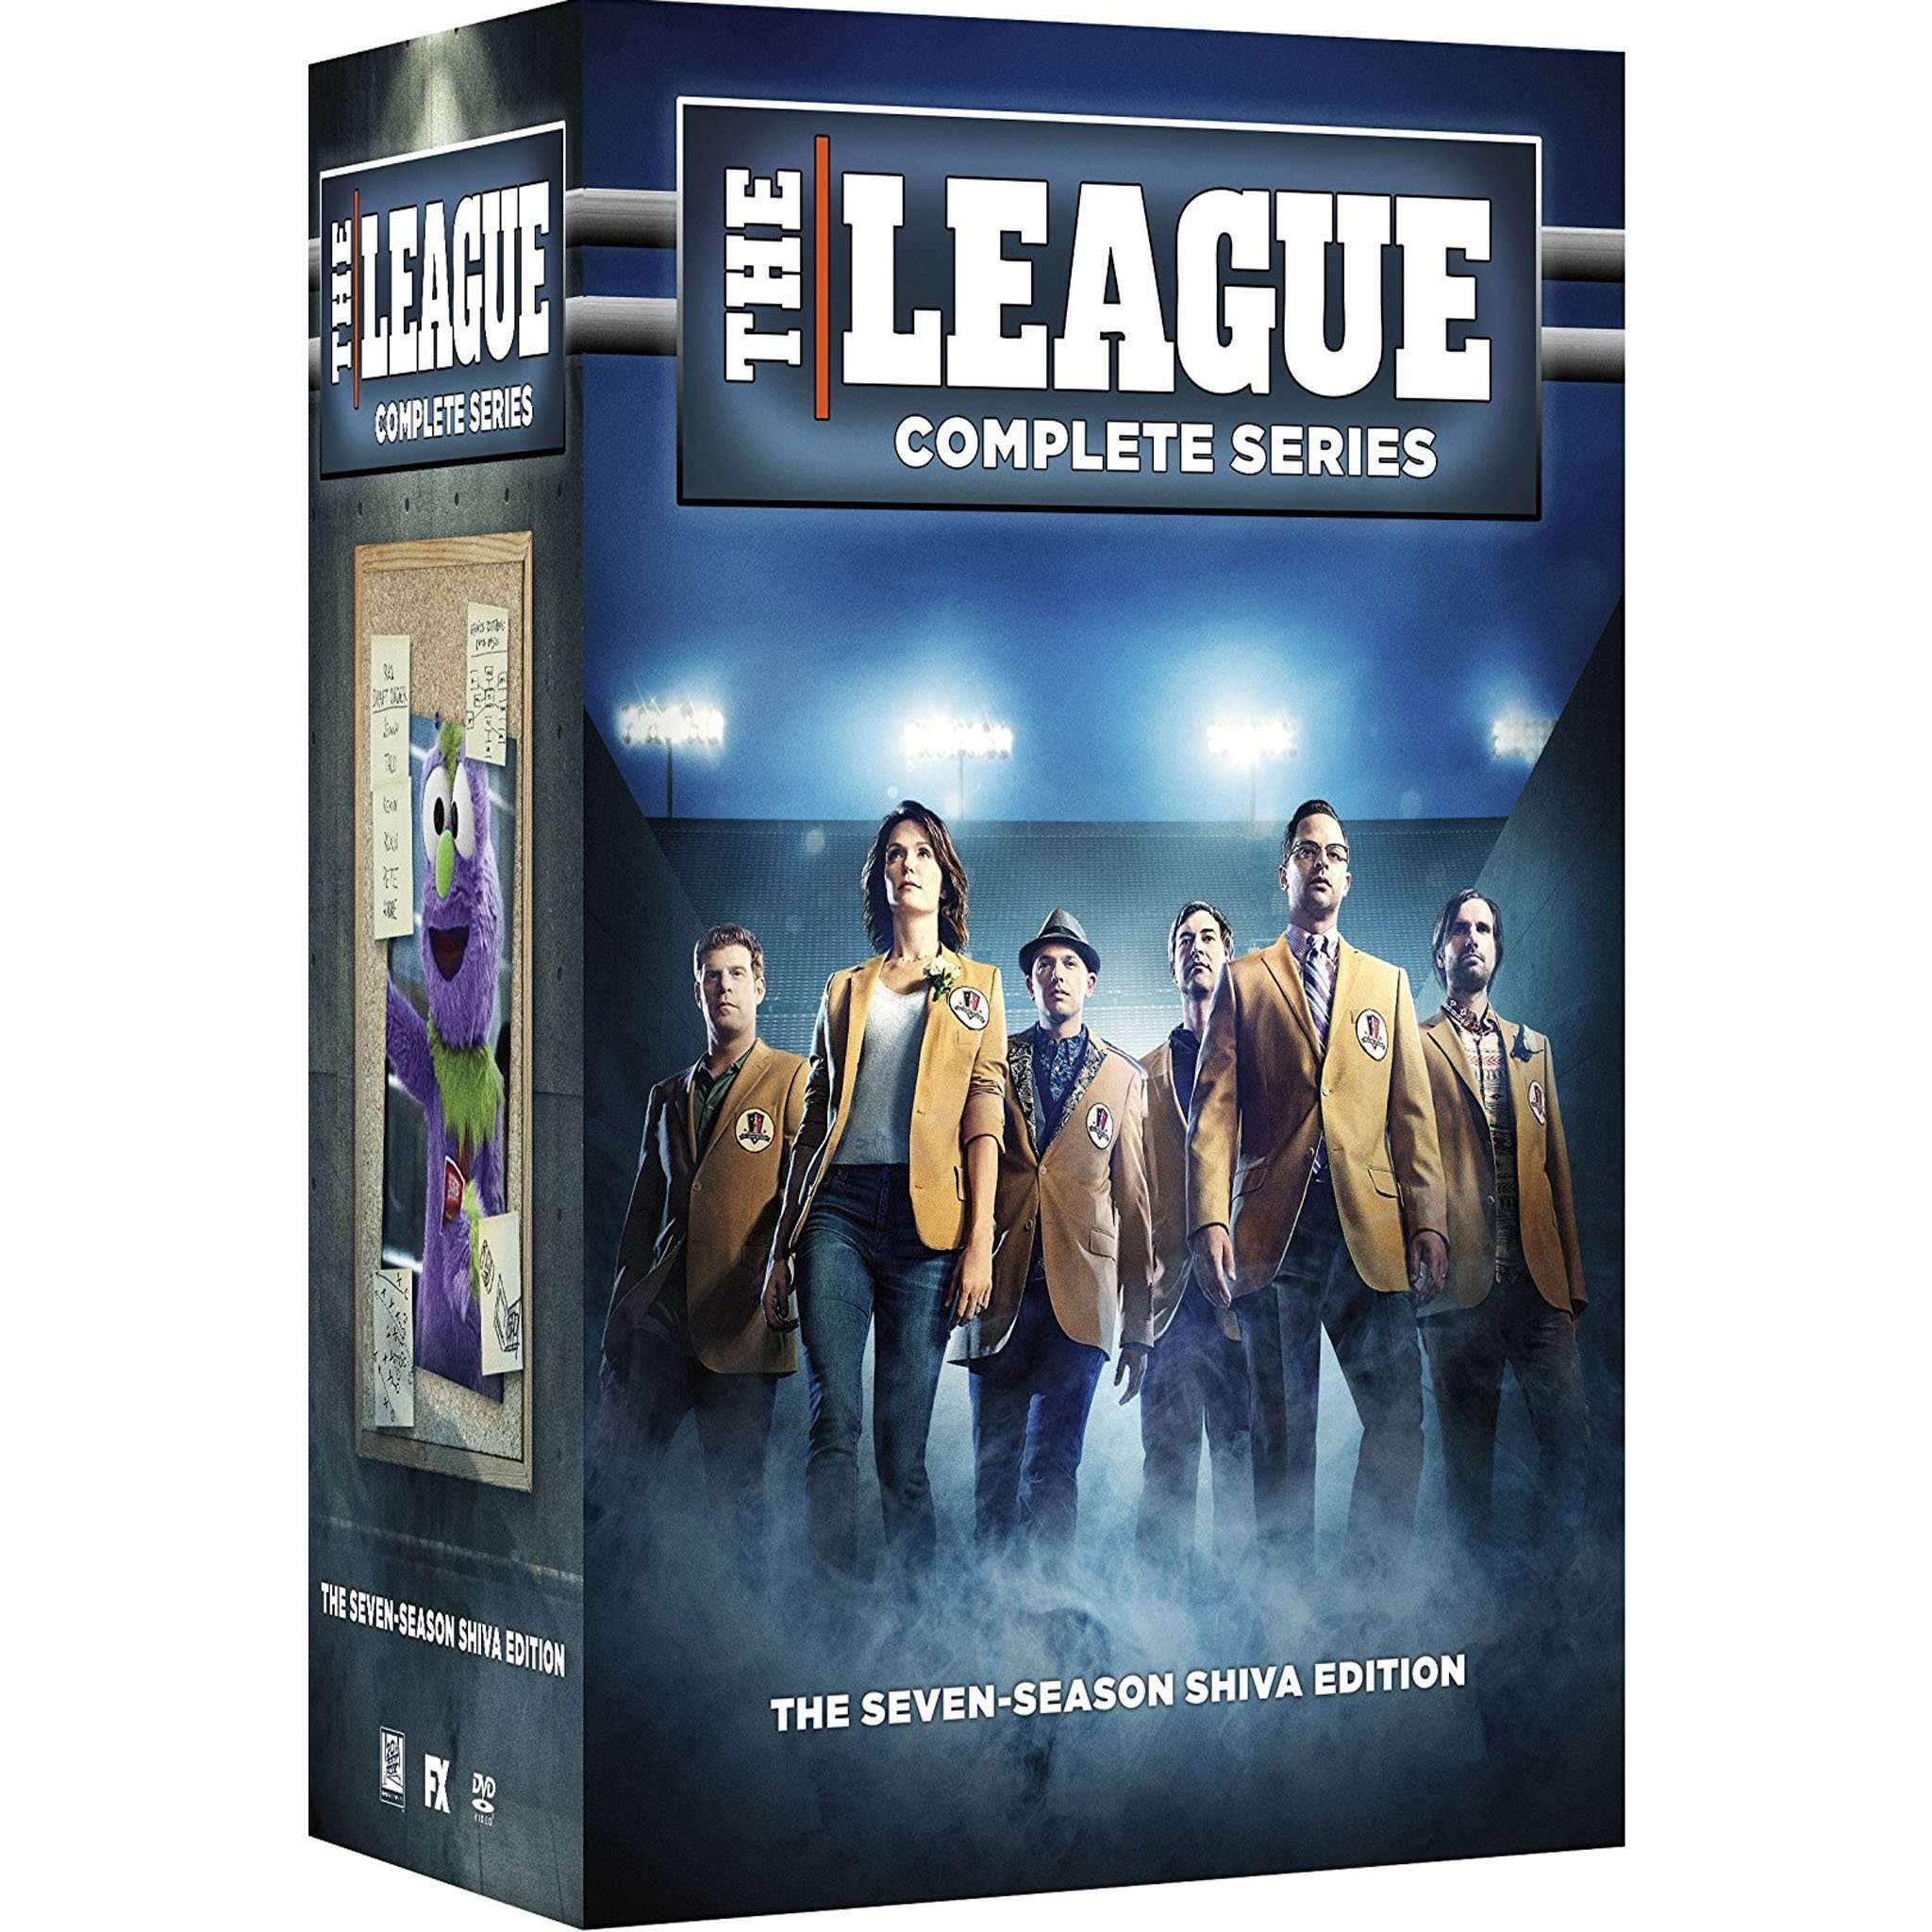 The League DVD Complete Series Box Set Fox Home Entertainmenmt DVDs & Blu-ray Discs > DVDs > Box Sets